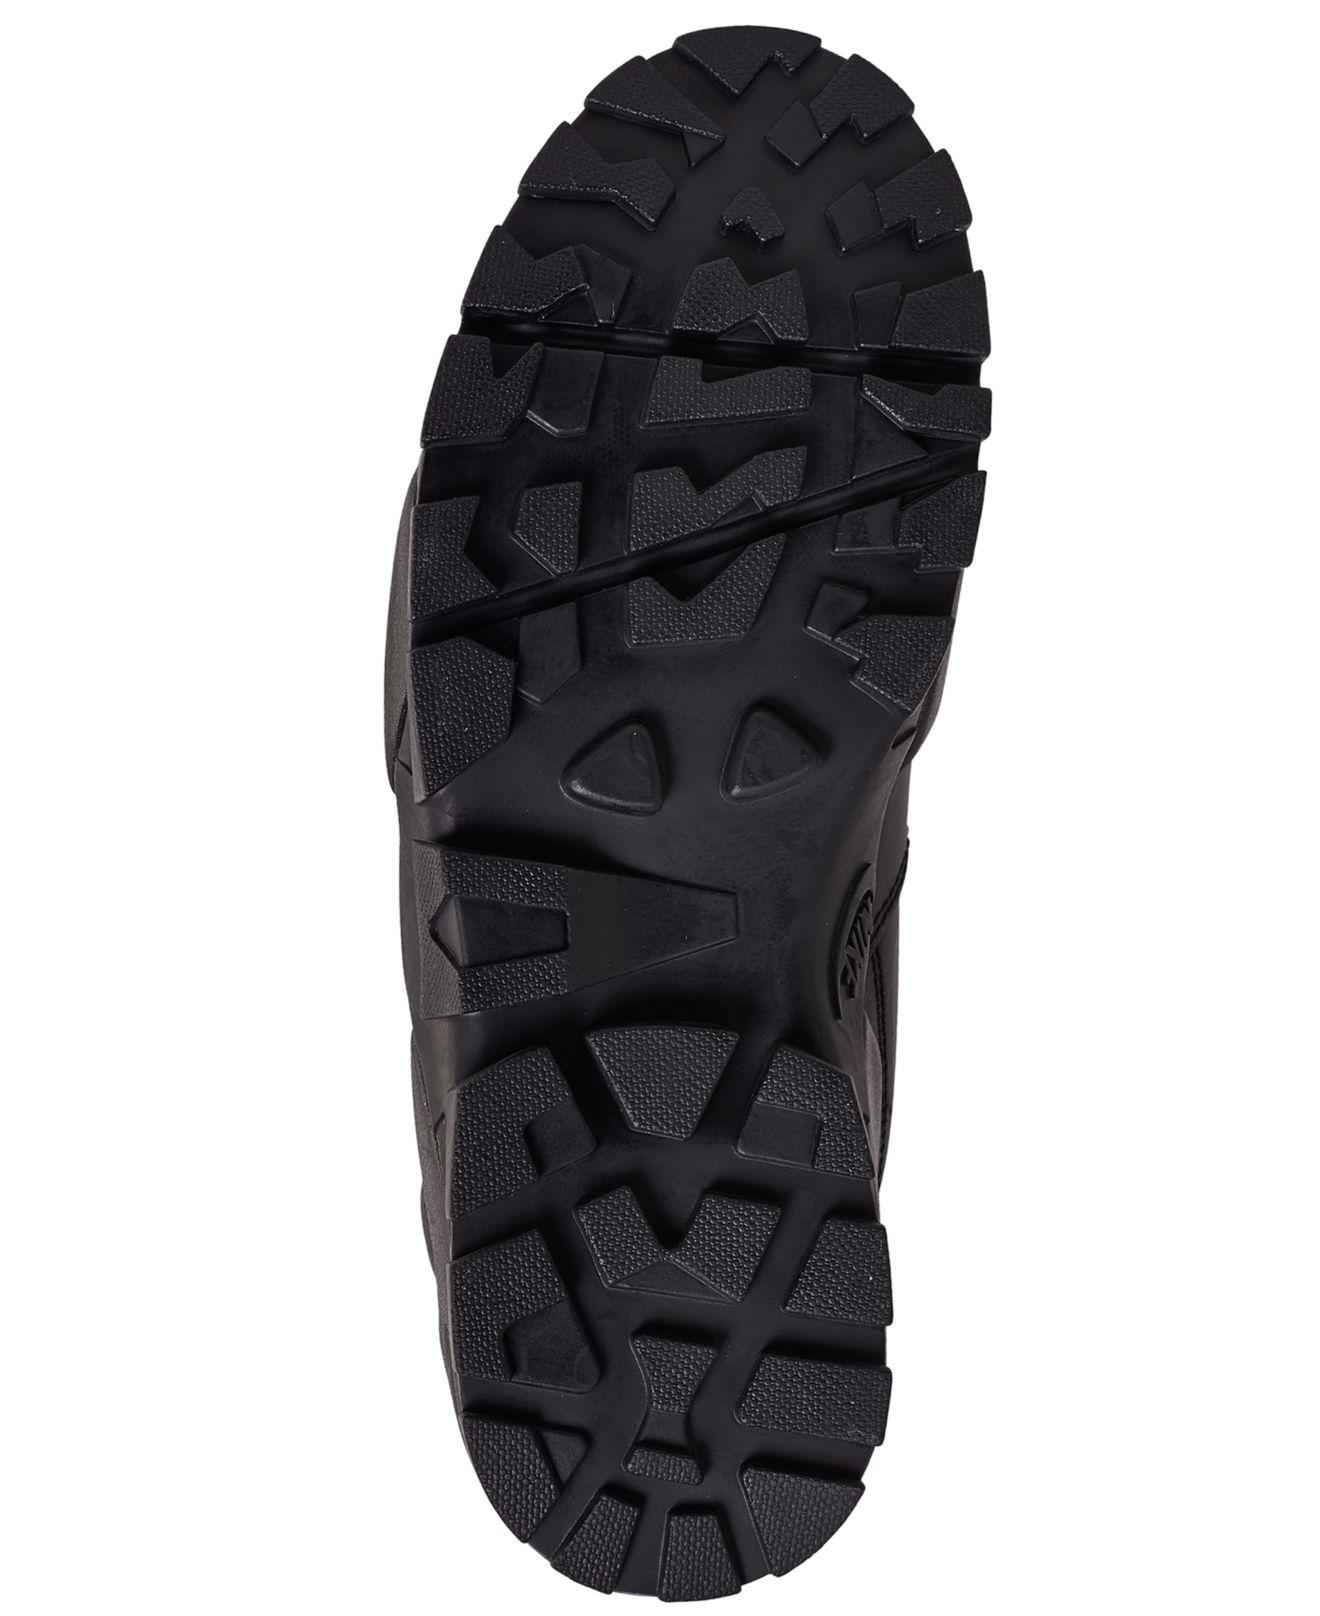 Nike Men's Black Rhyodomo Sneaker Boots From Finish Line